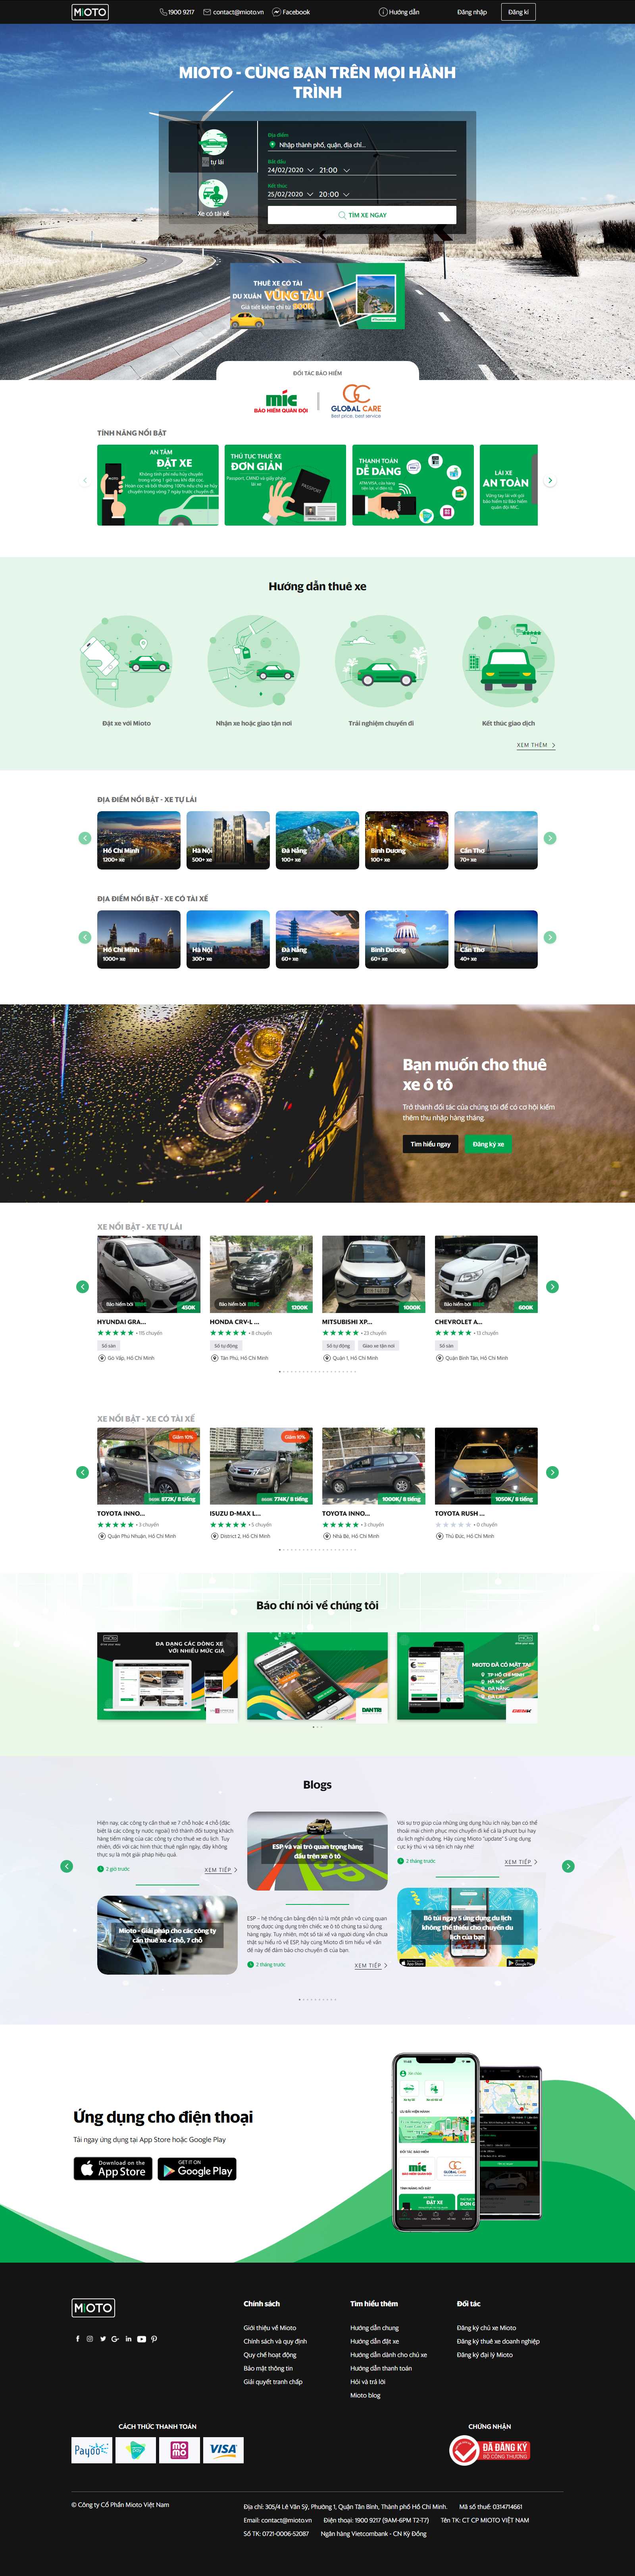 Thiết kế Website thuê xe - www.mioto.vn